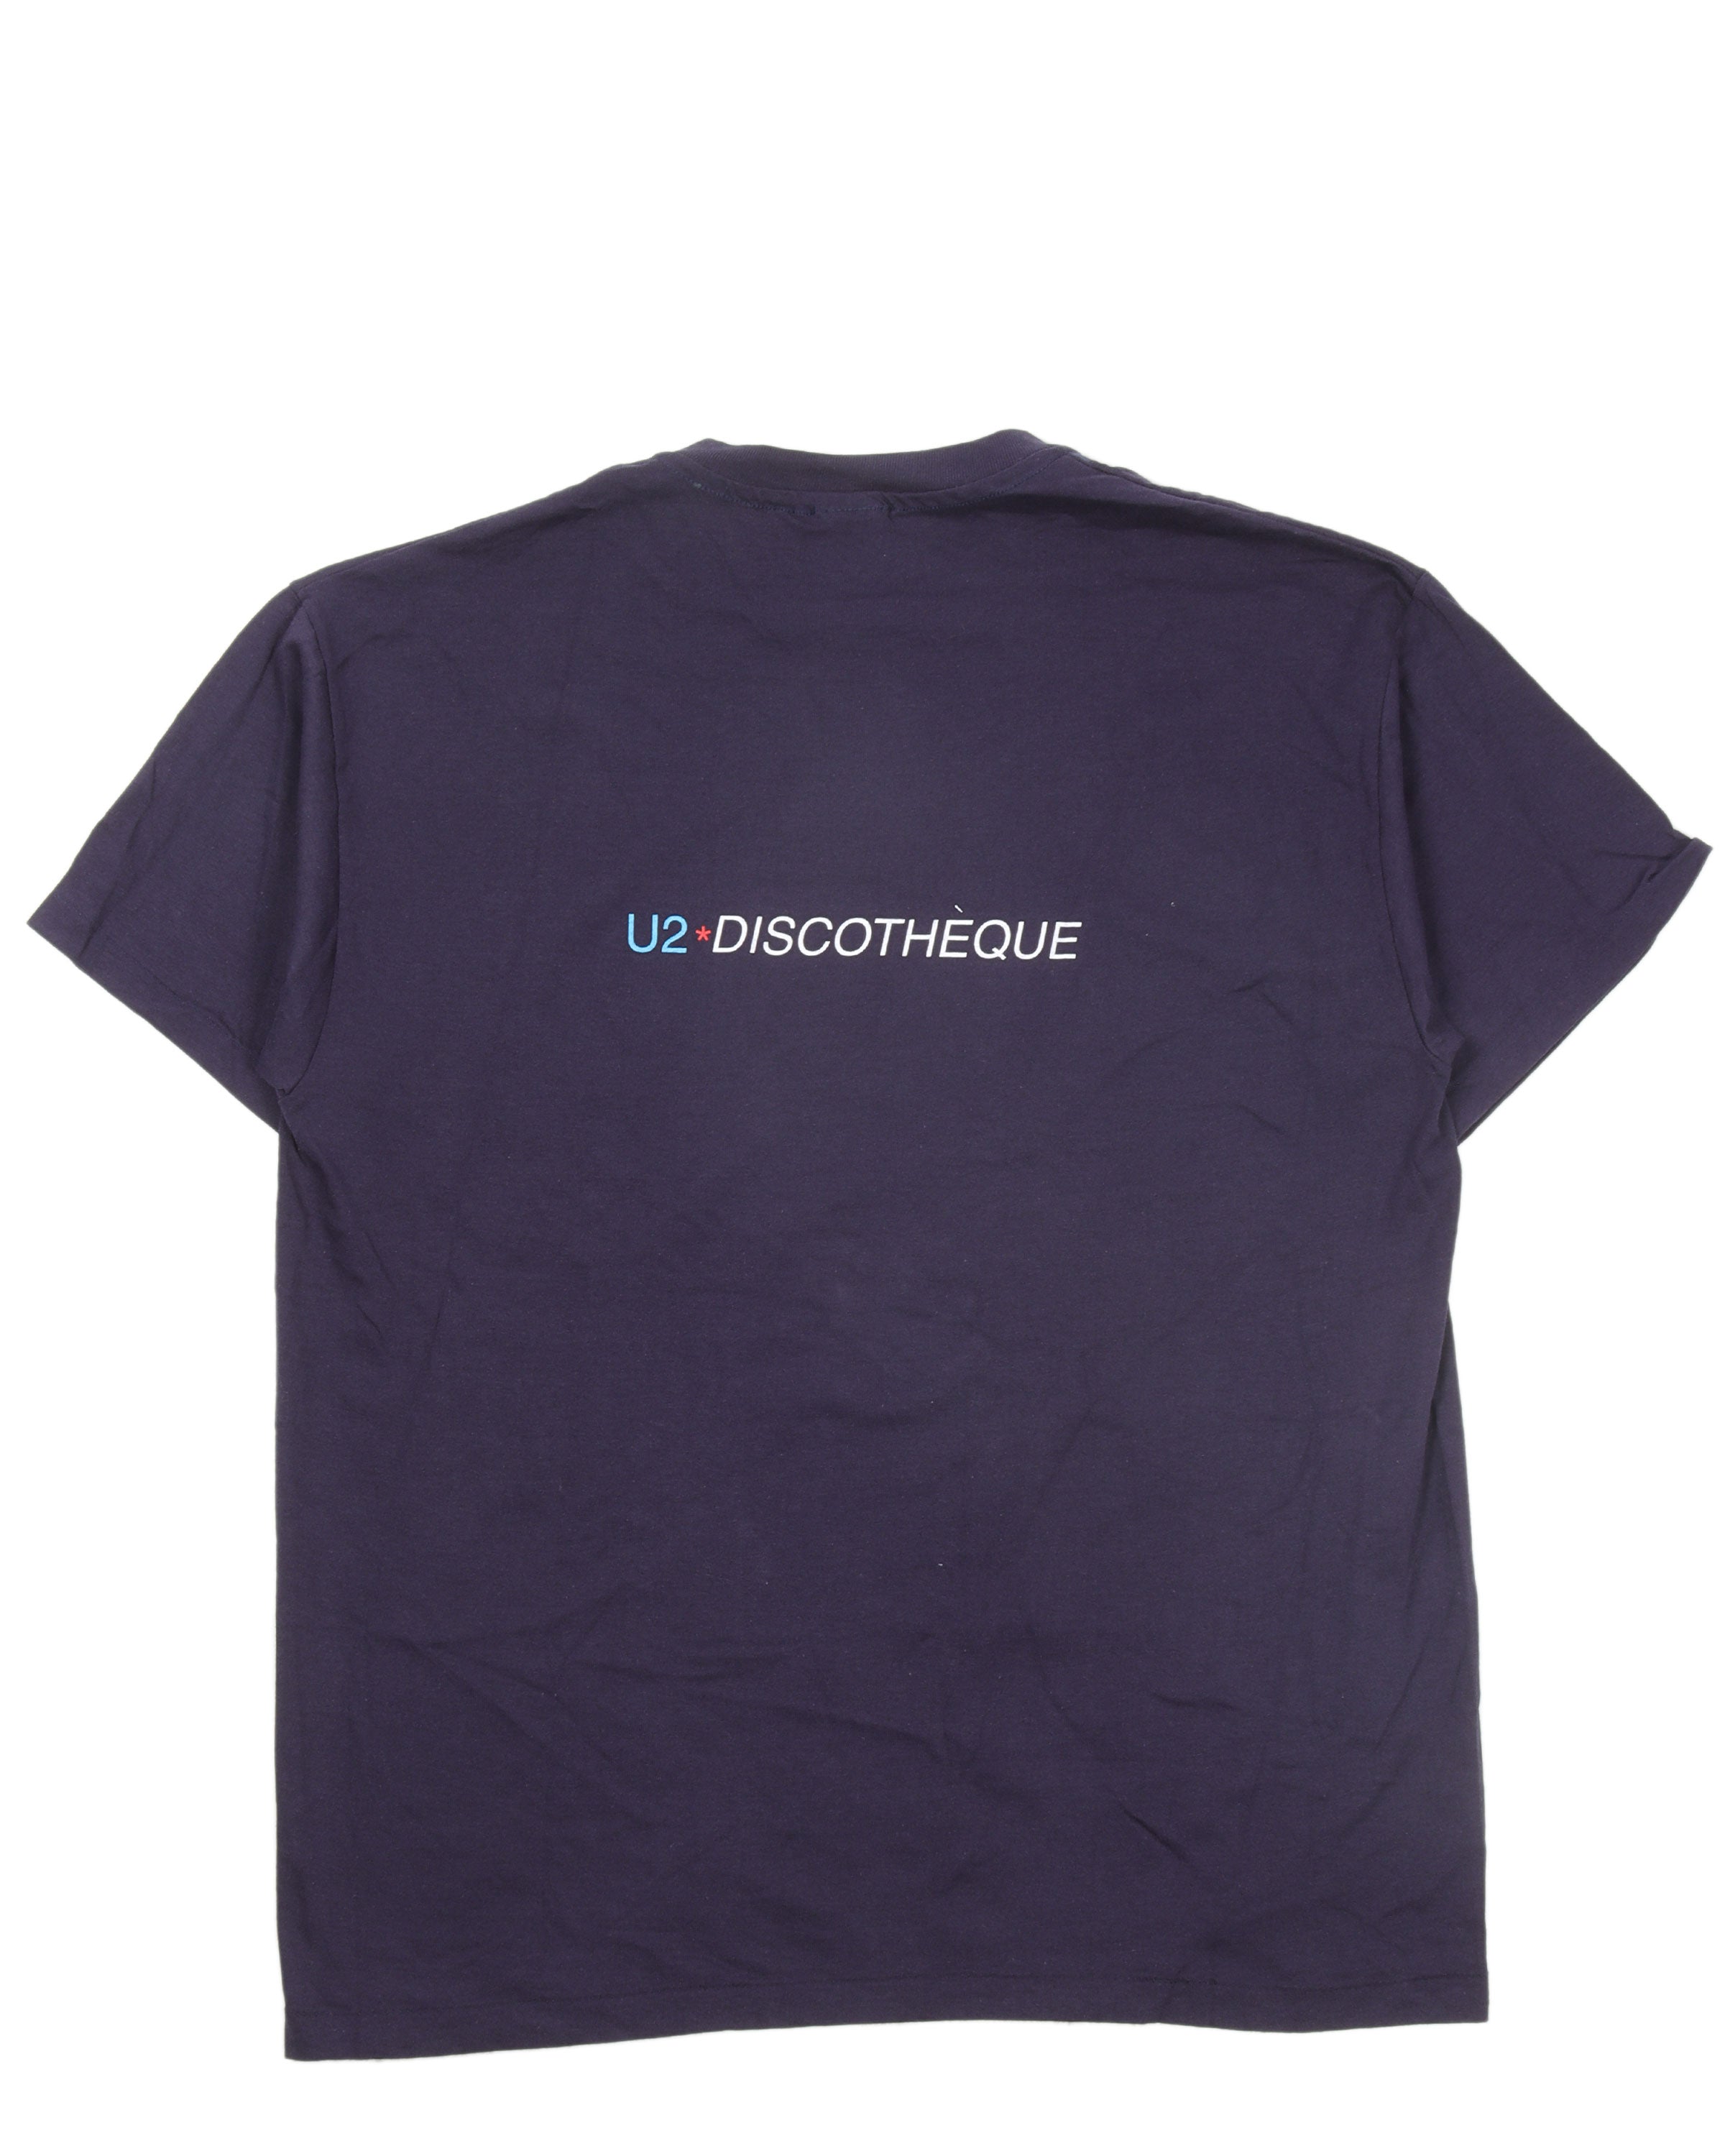 U2 "Discotheque" T-Shirt